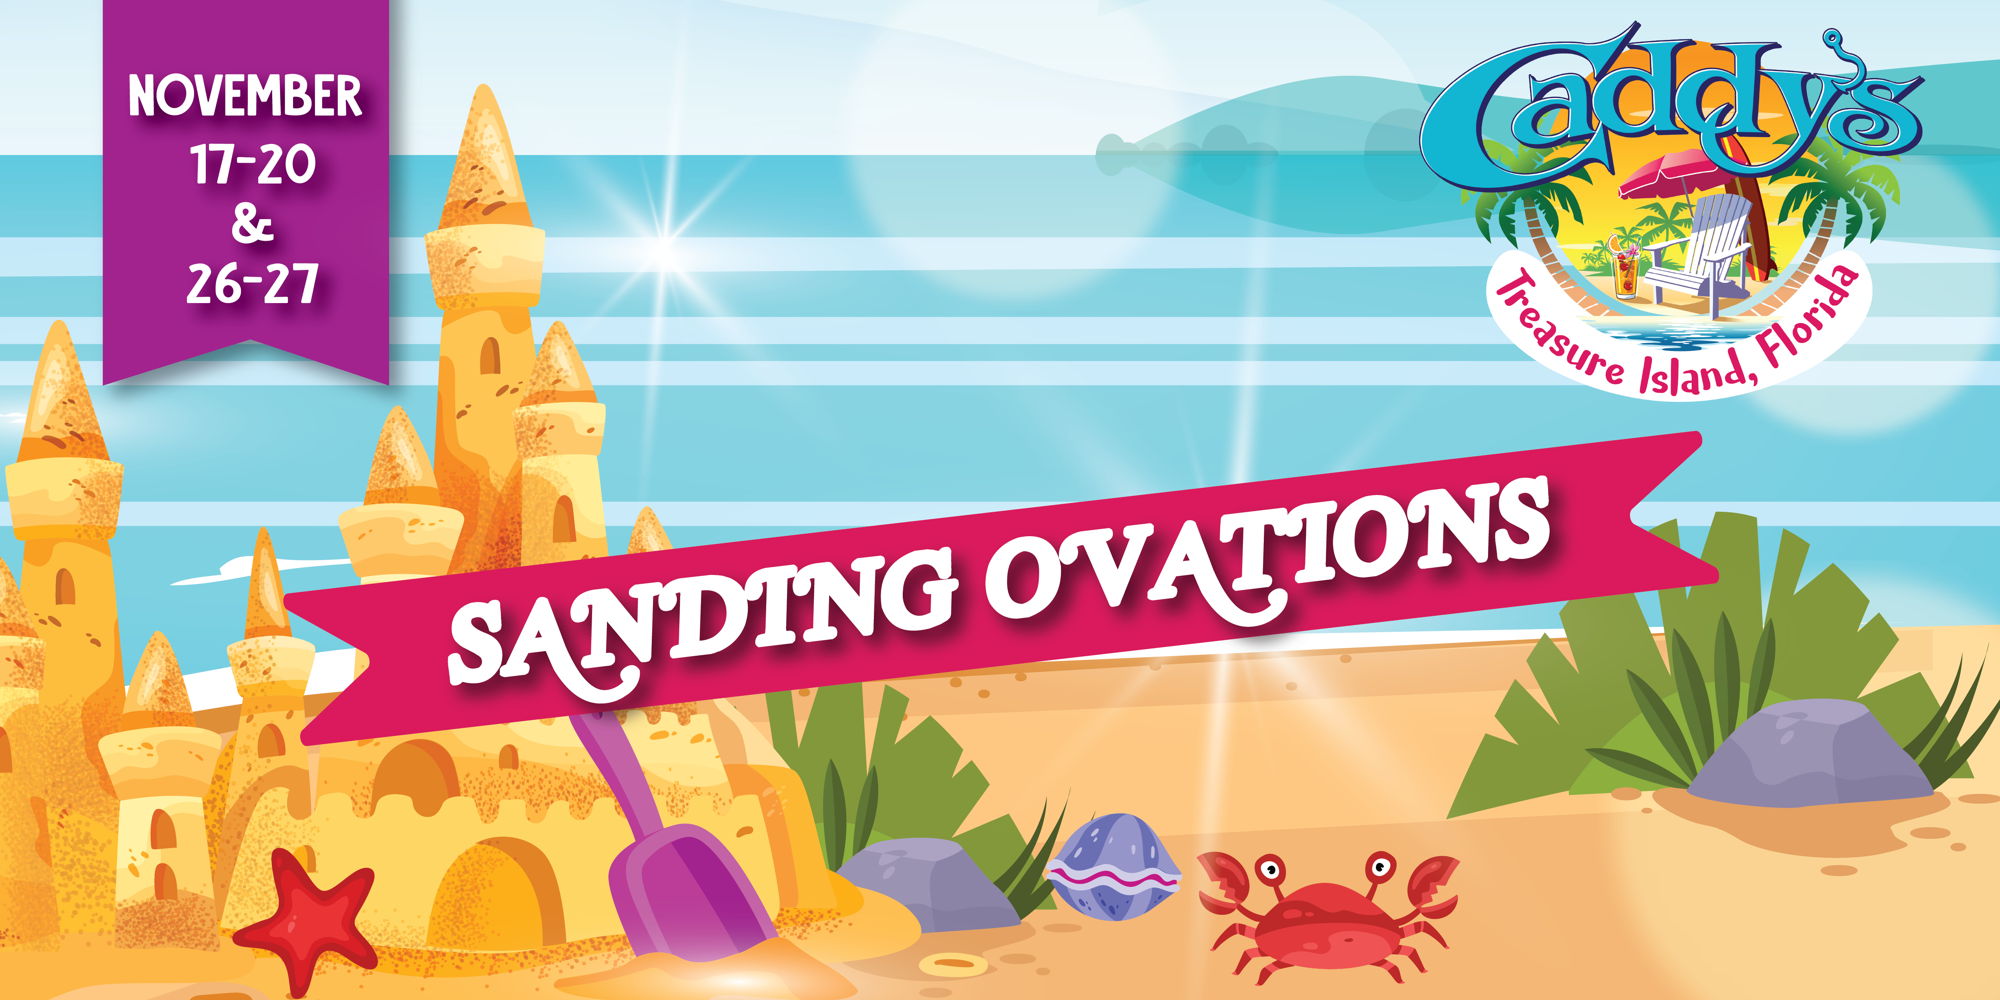 Sanding Ovations! promotional image